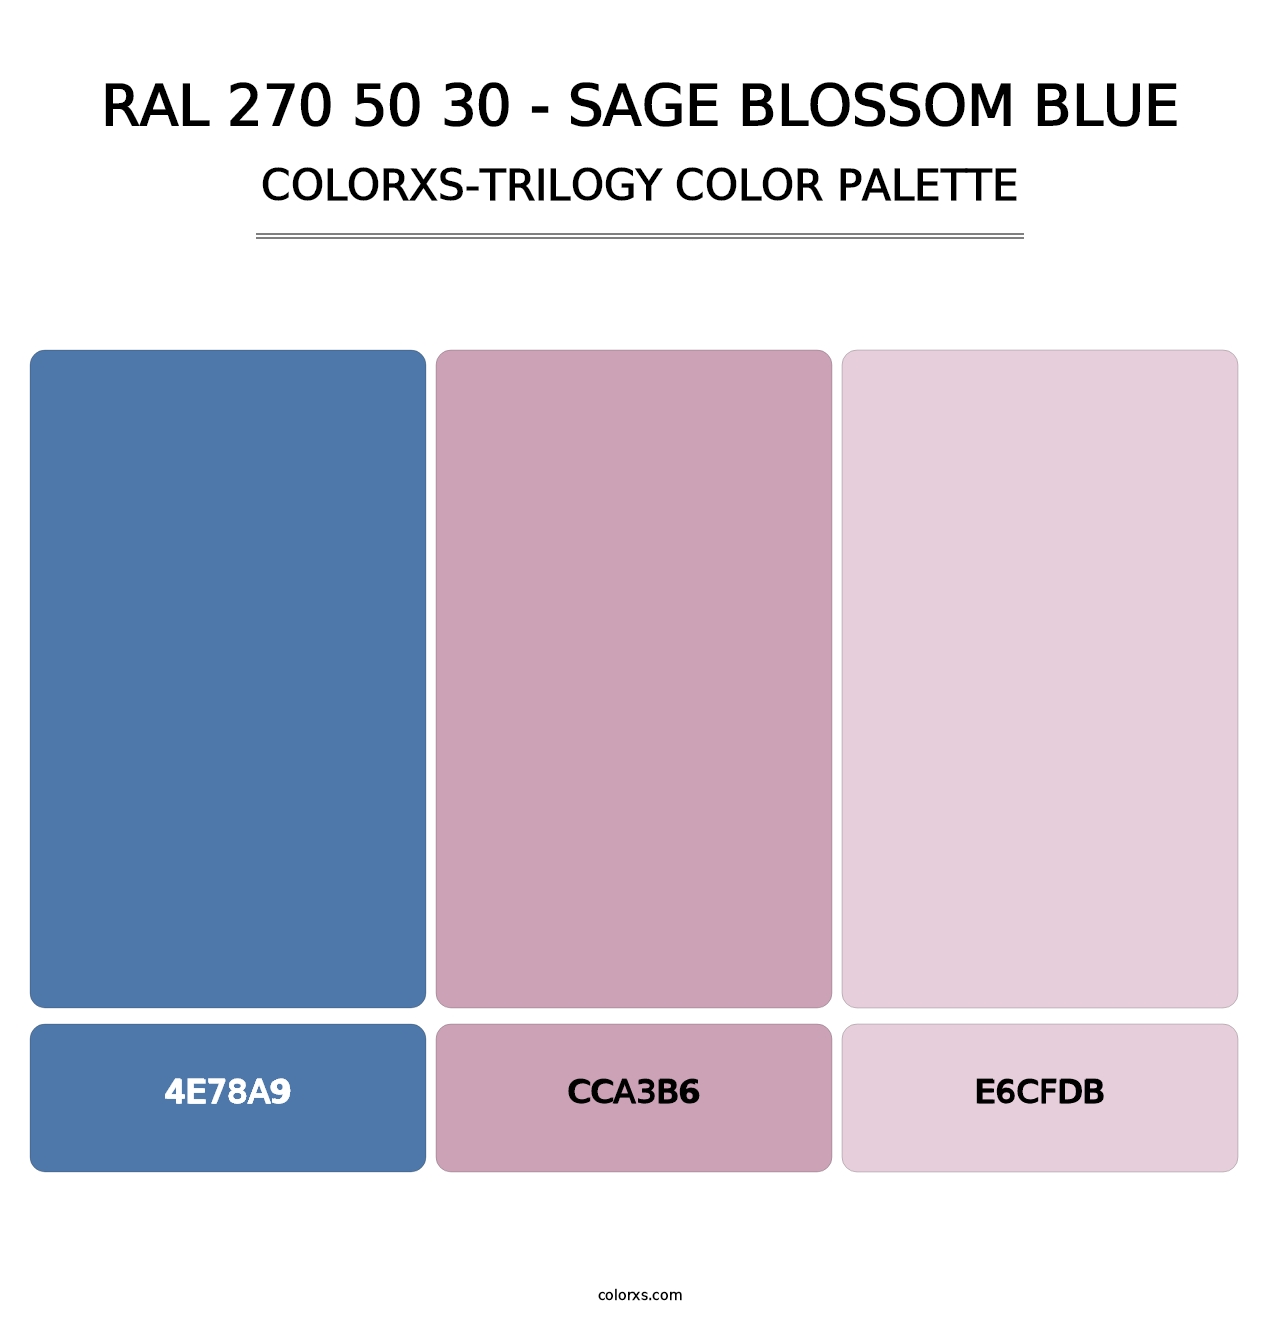 RAL 270 50 30 - Sage Blossom Blue - Colorxs Trilogy Palette